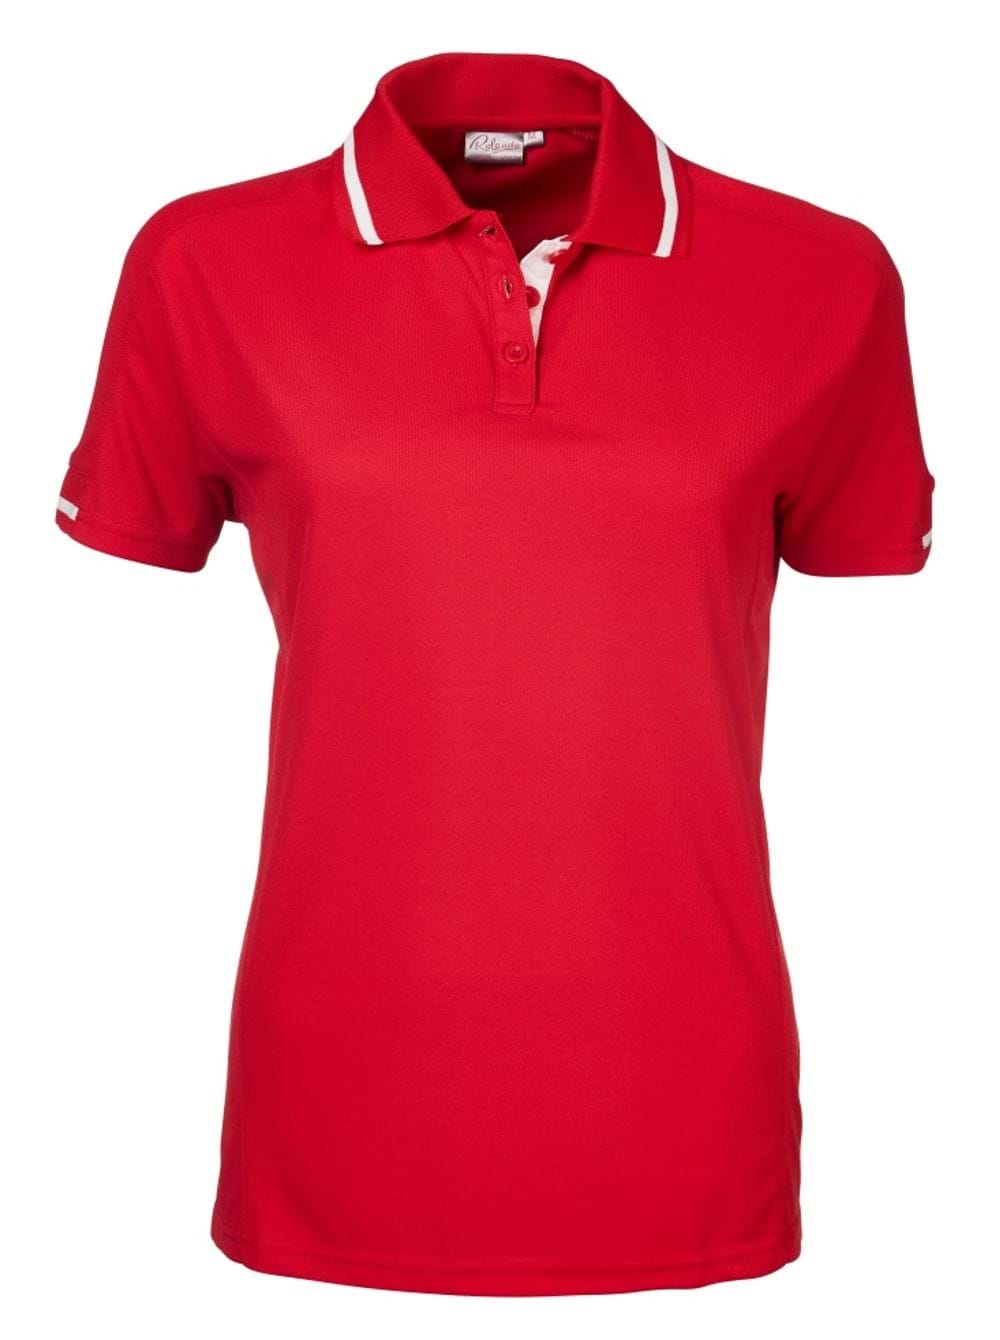 Ladies Qd1 Quick Dry Golfer - RED / White Trim Red / M